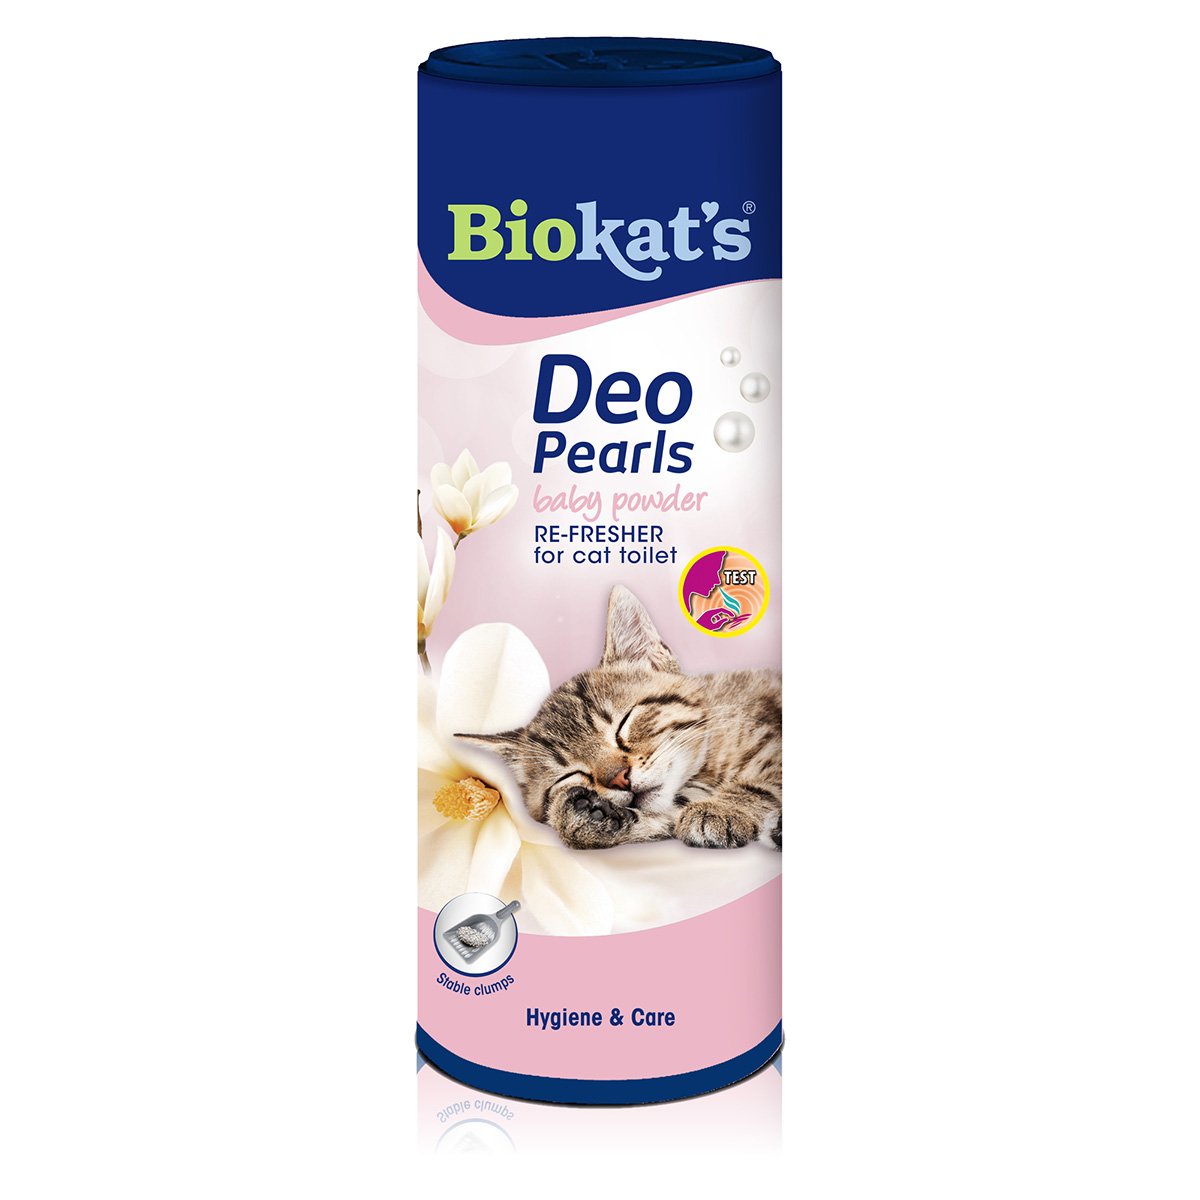 Biokat's Deo Pearls Baby Powder 700g von BioKat's